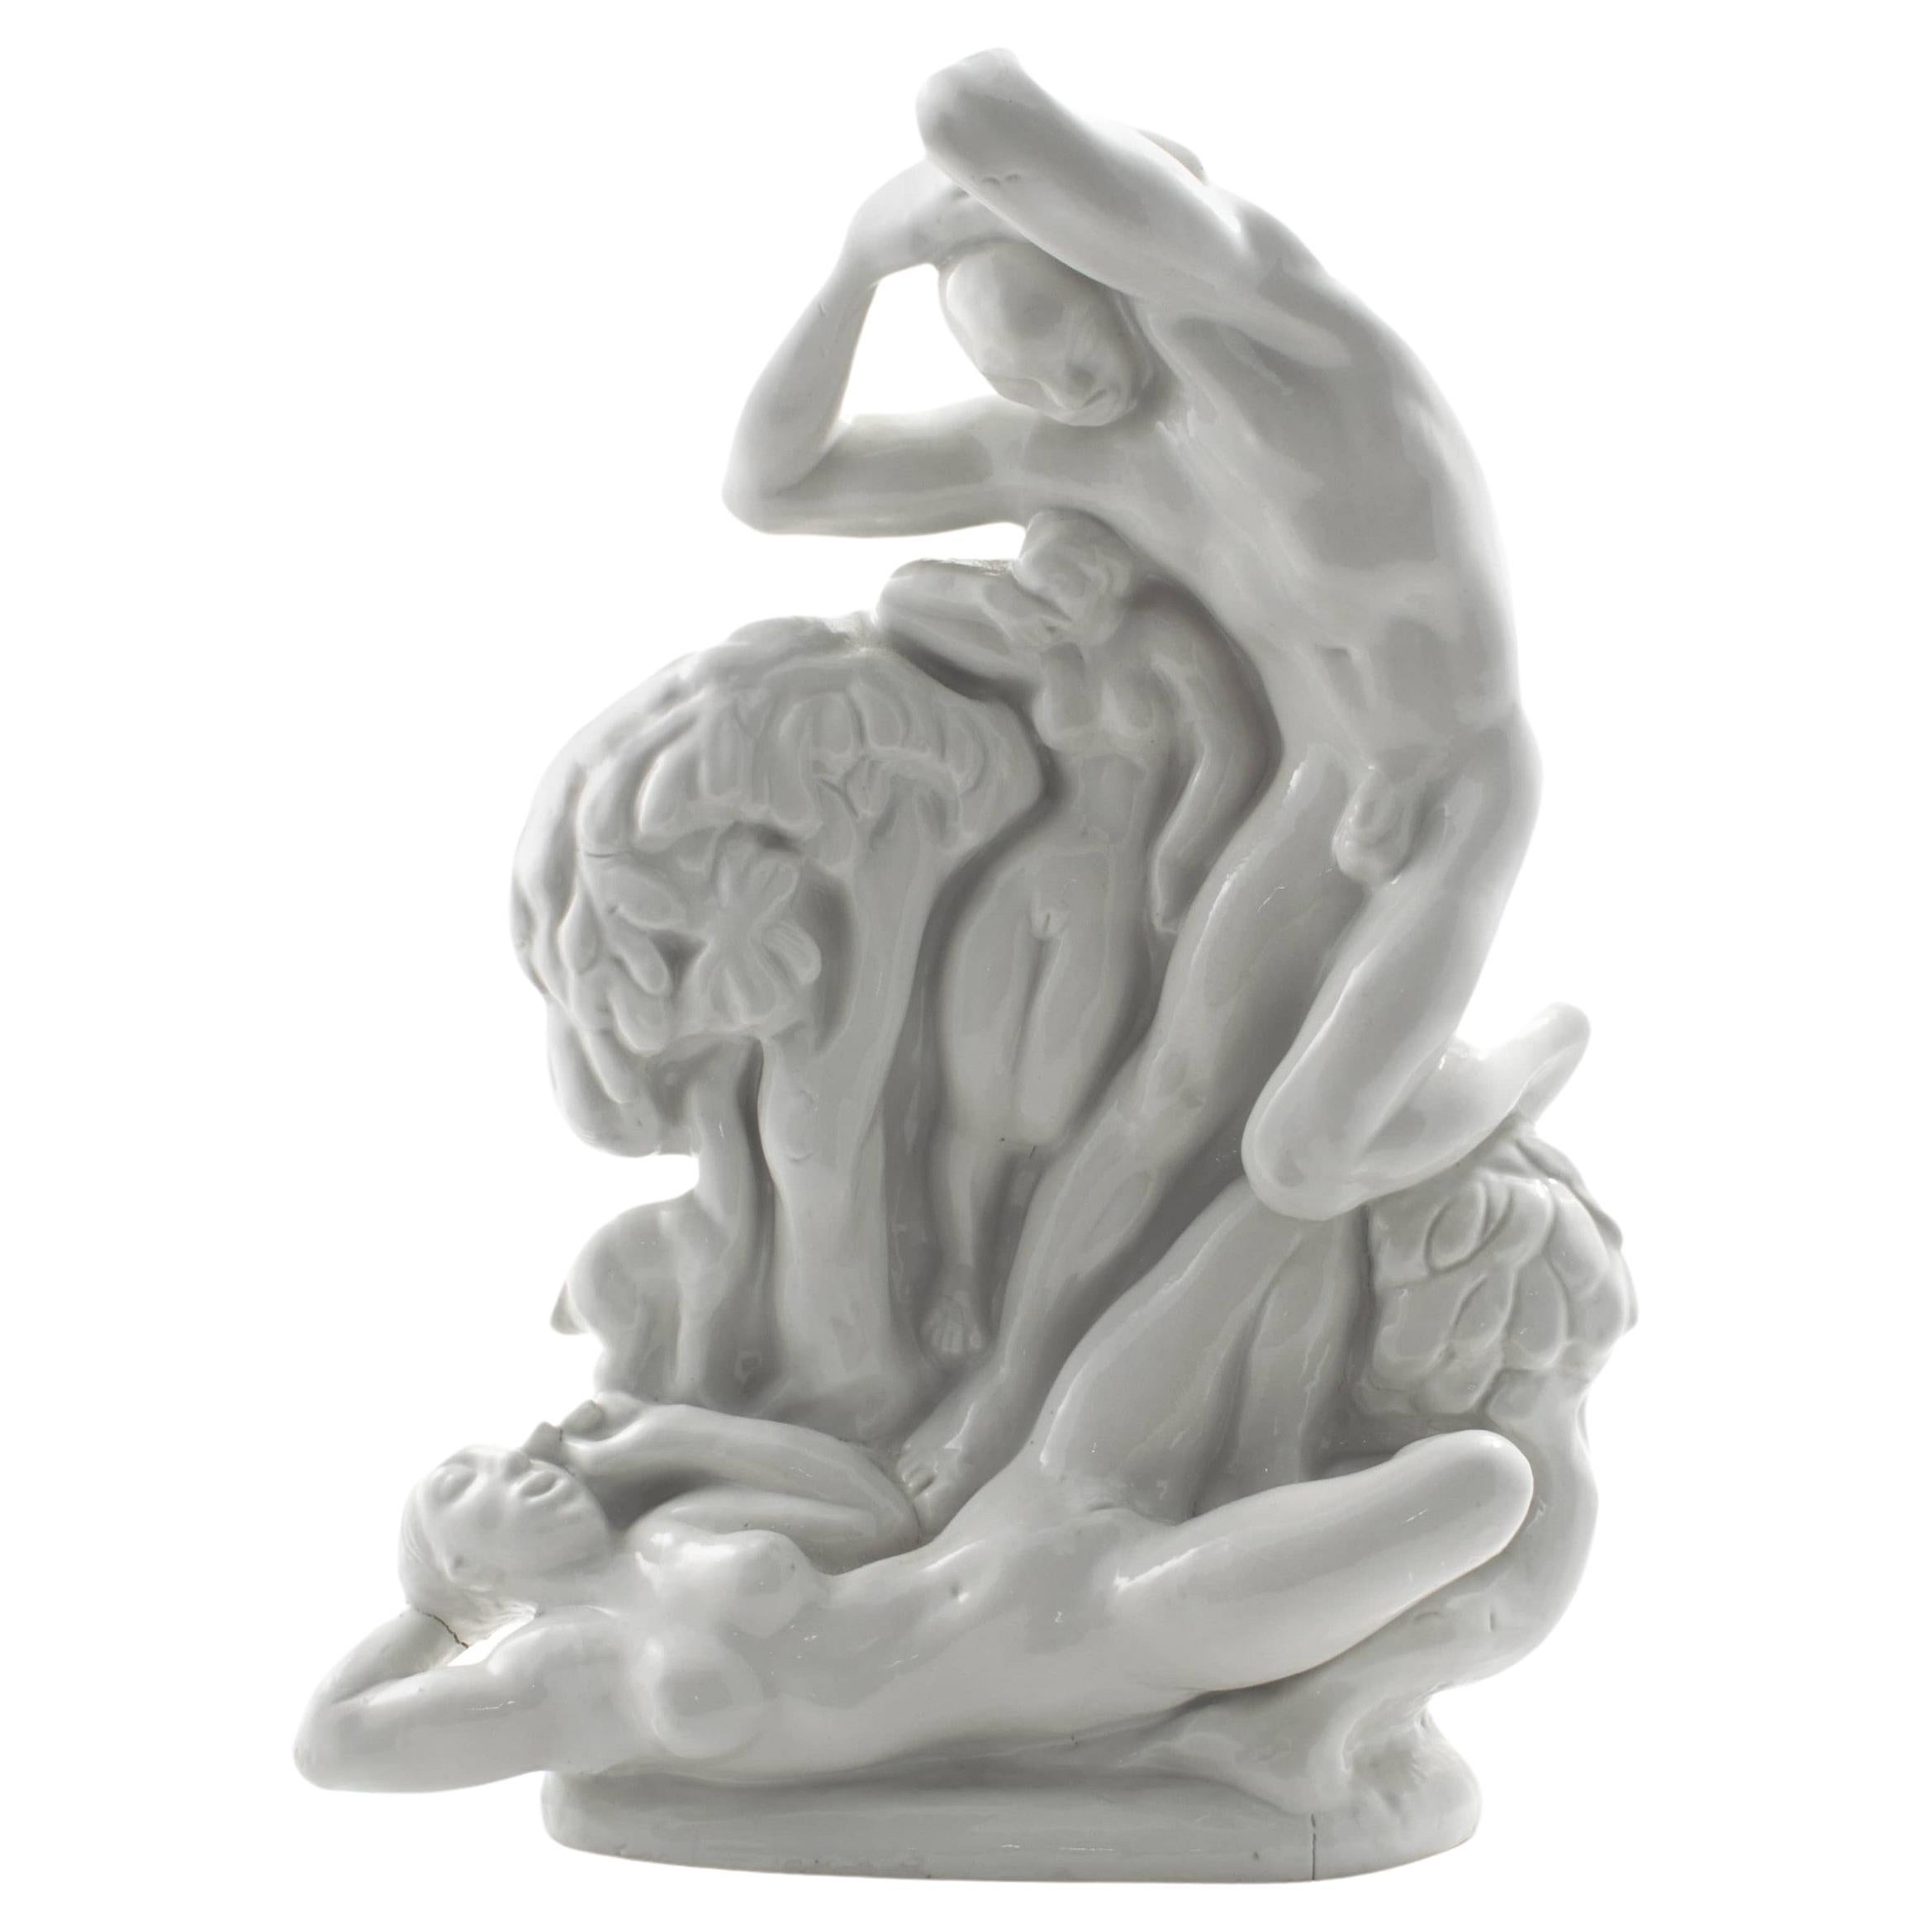 Kai Nielsen Sculpture "Zeus & Lo"